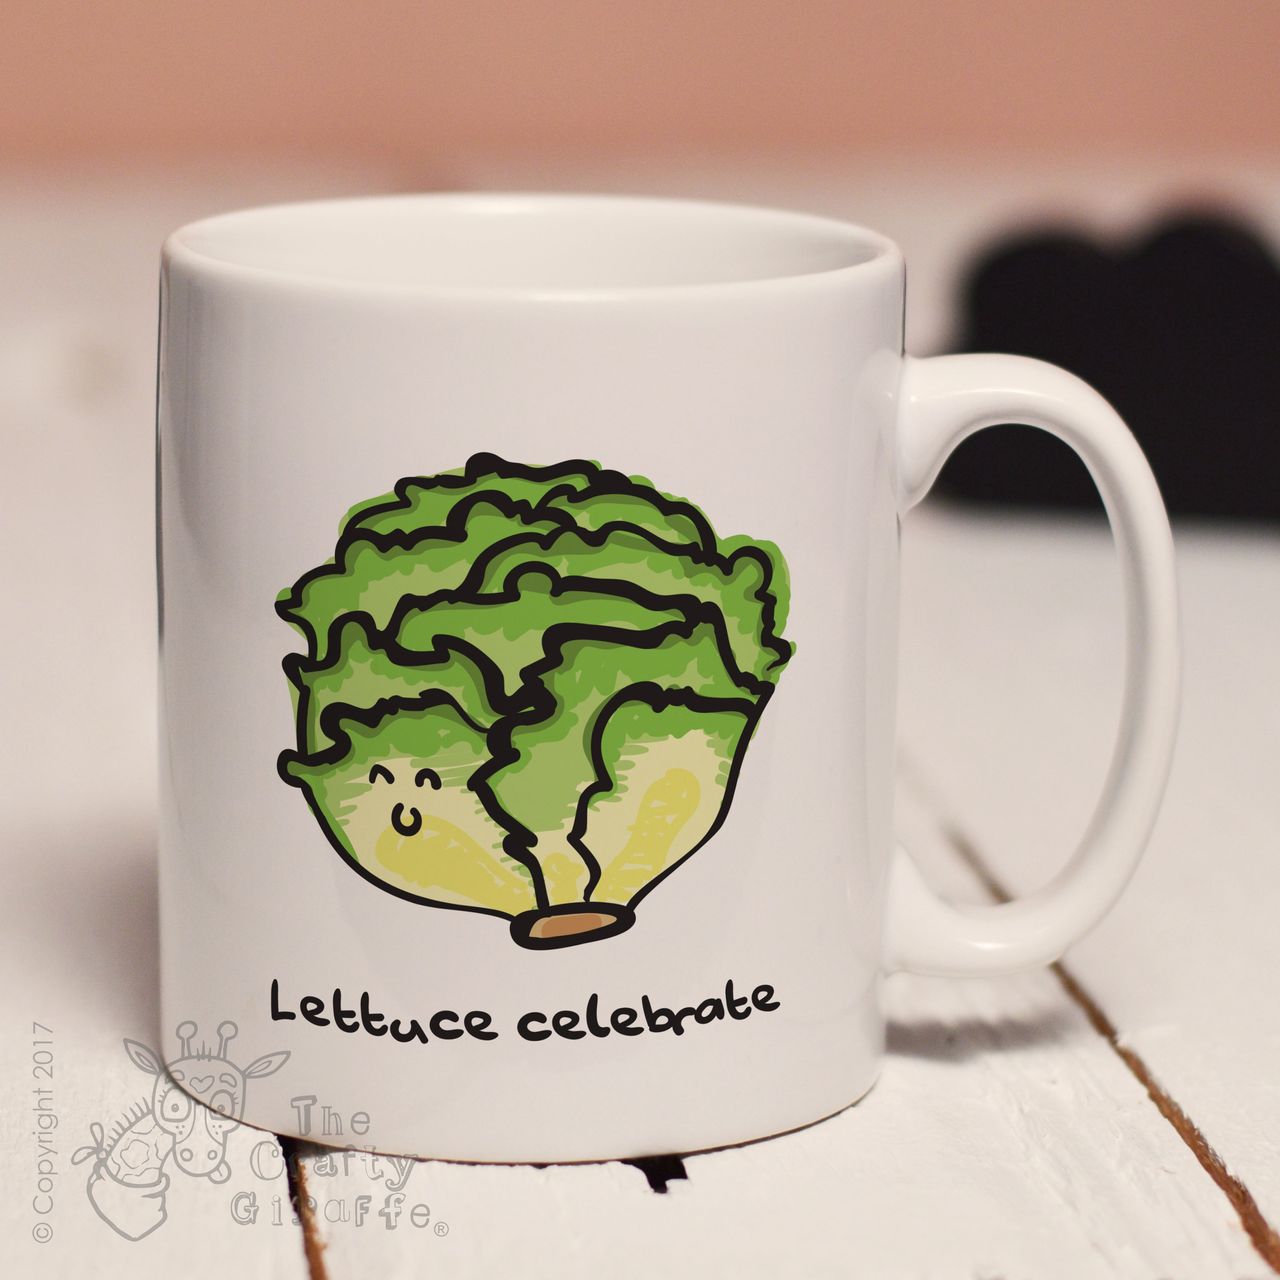 Lettuce celebrate mug